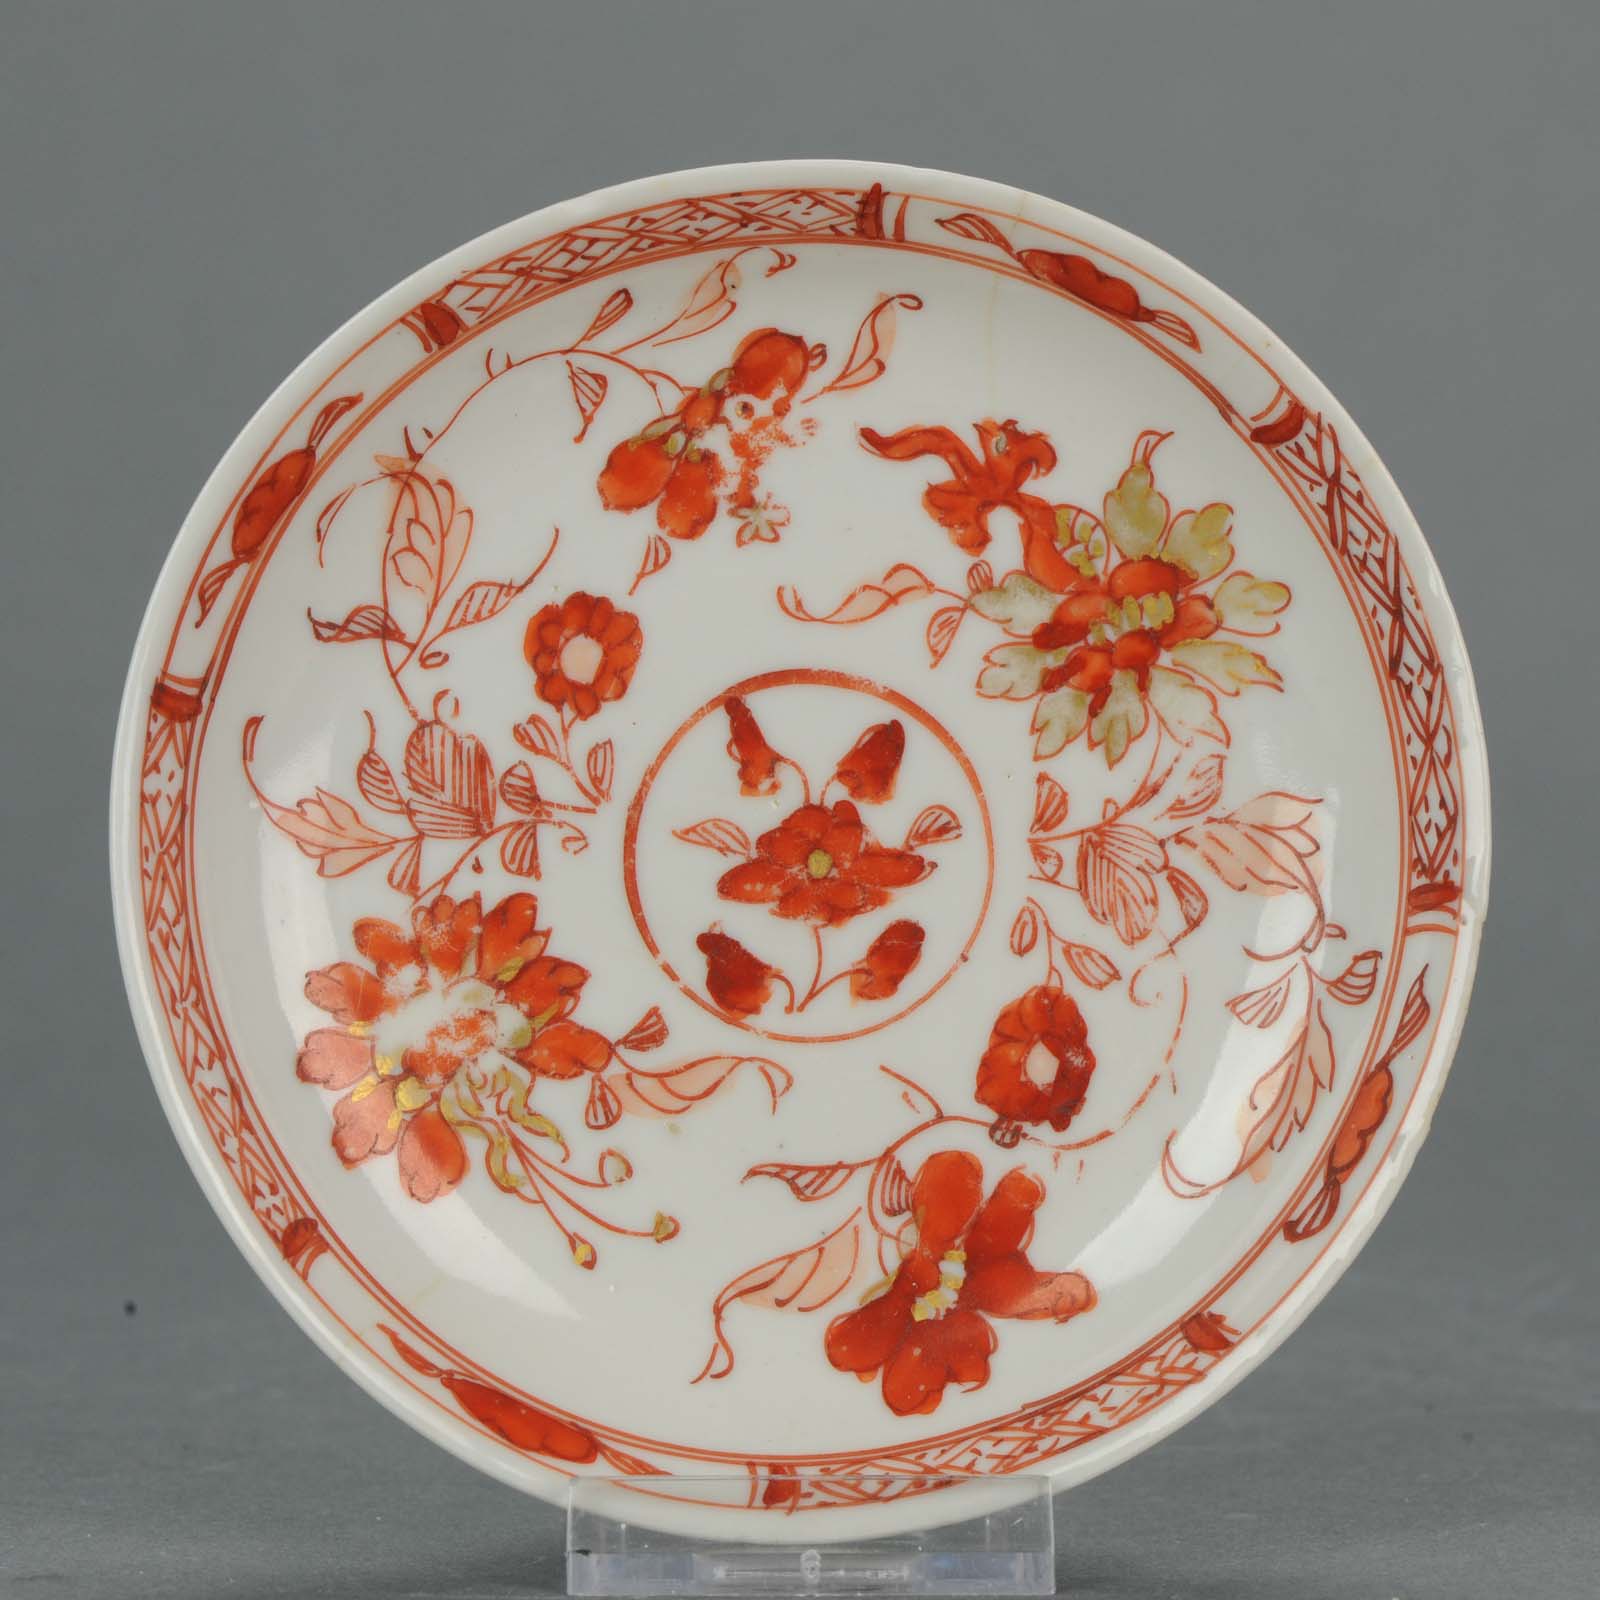 Ca 1720 Kangxi Chinese Porcelain Plate Flowers Rouche de Fer Blood Milk